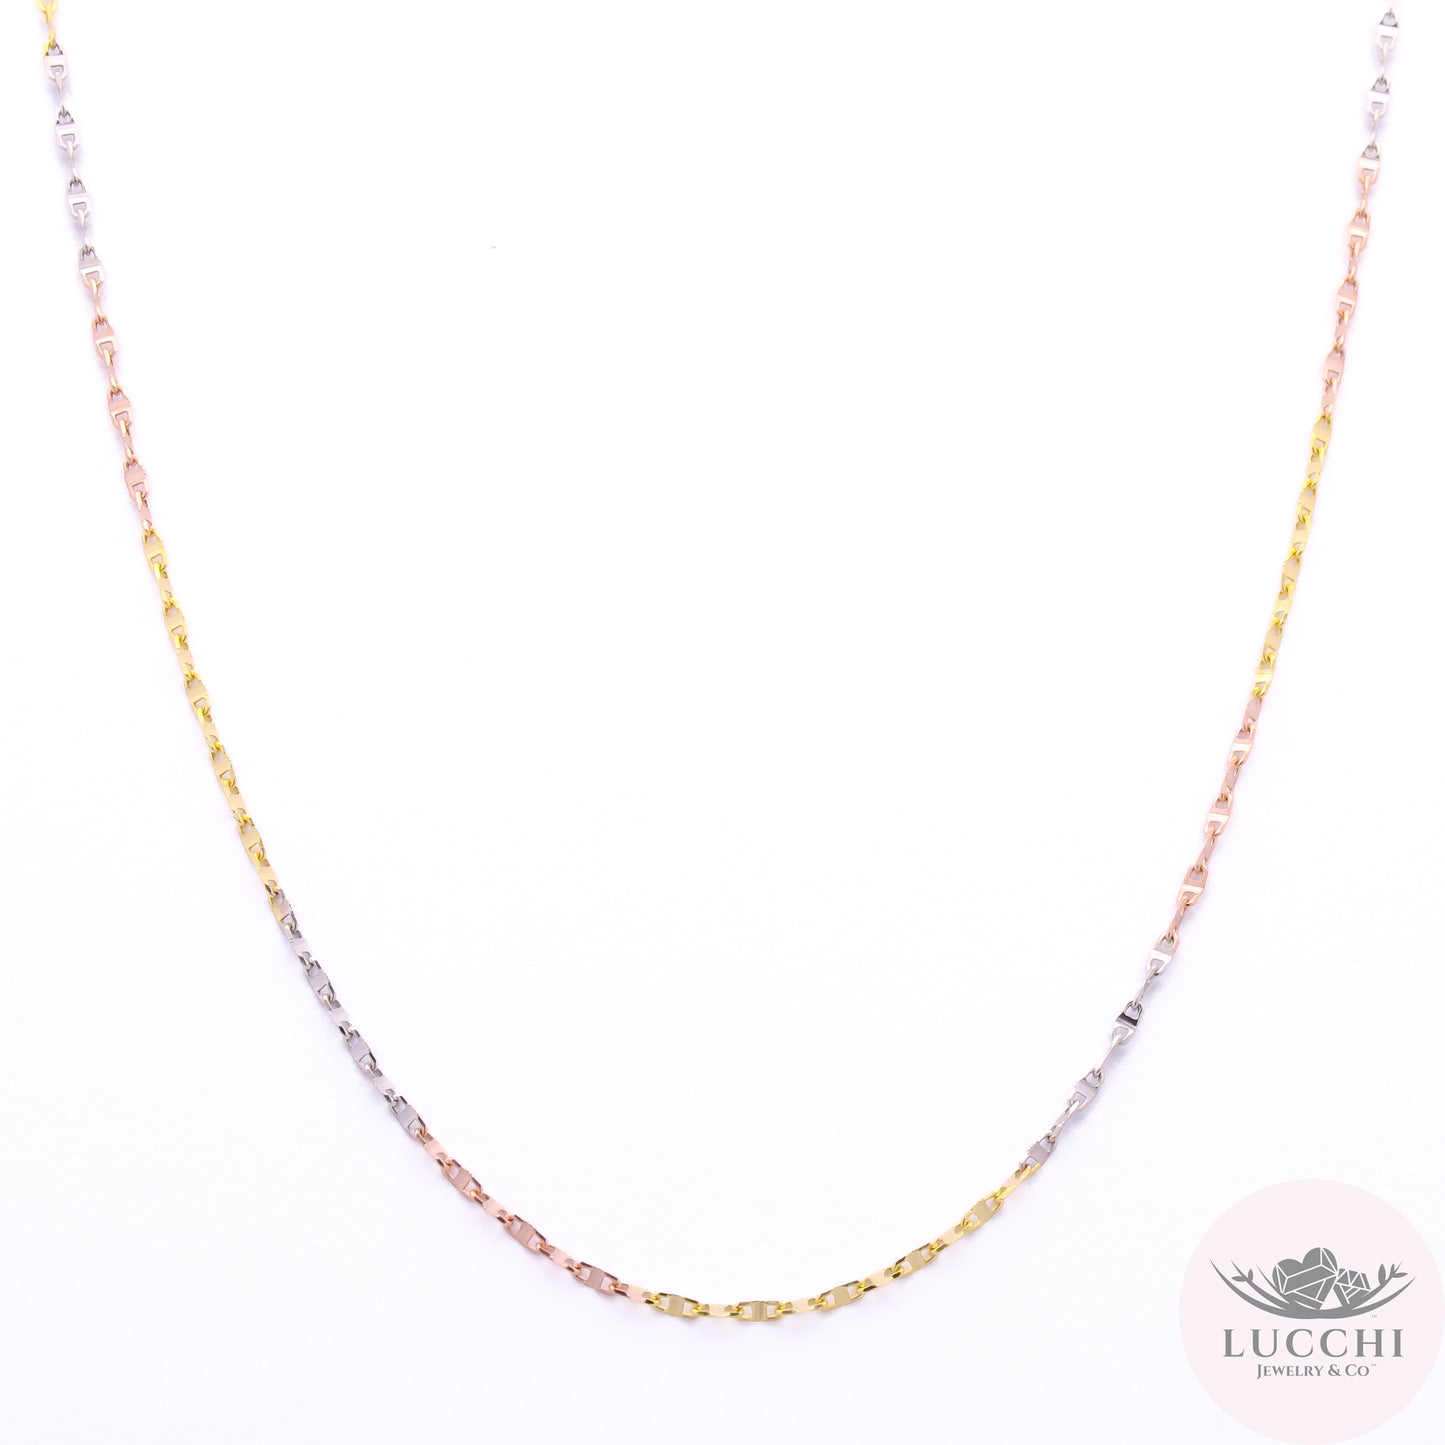 18" Mariner Tri Gold Rainbow Chain Necklace - 1mm - 14k